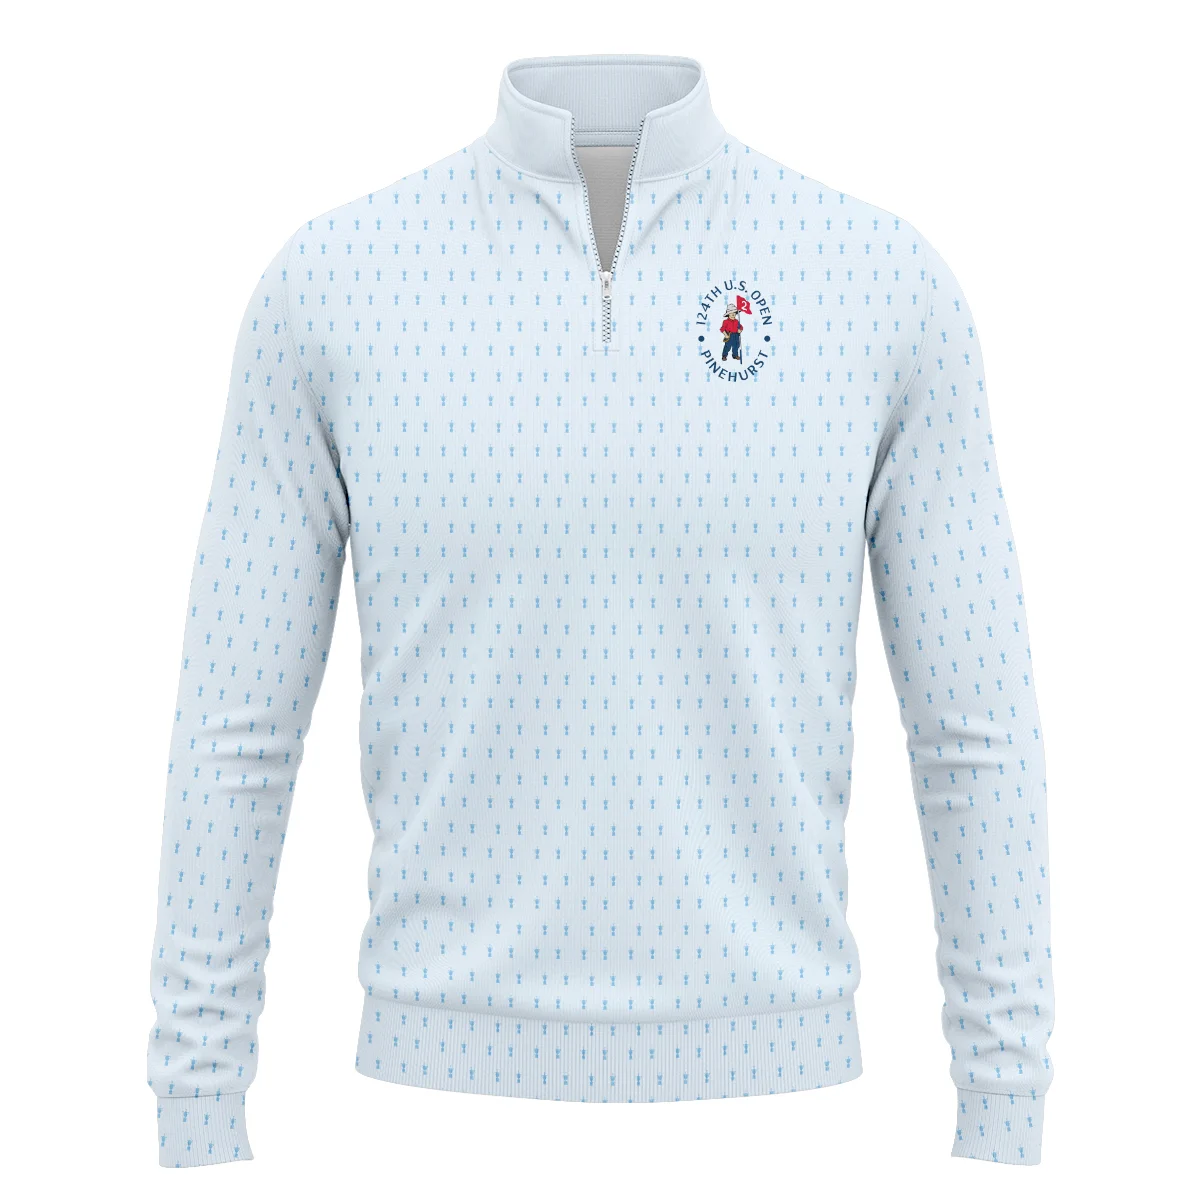 Golf Pattern Cup Light Blue Green 124th U.S. Open Pinehurst Unisex T-Shirt Style Classic T-Shirt